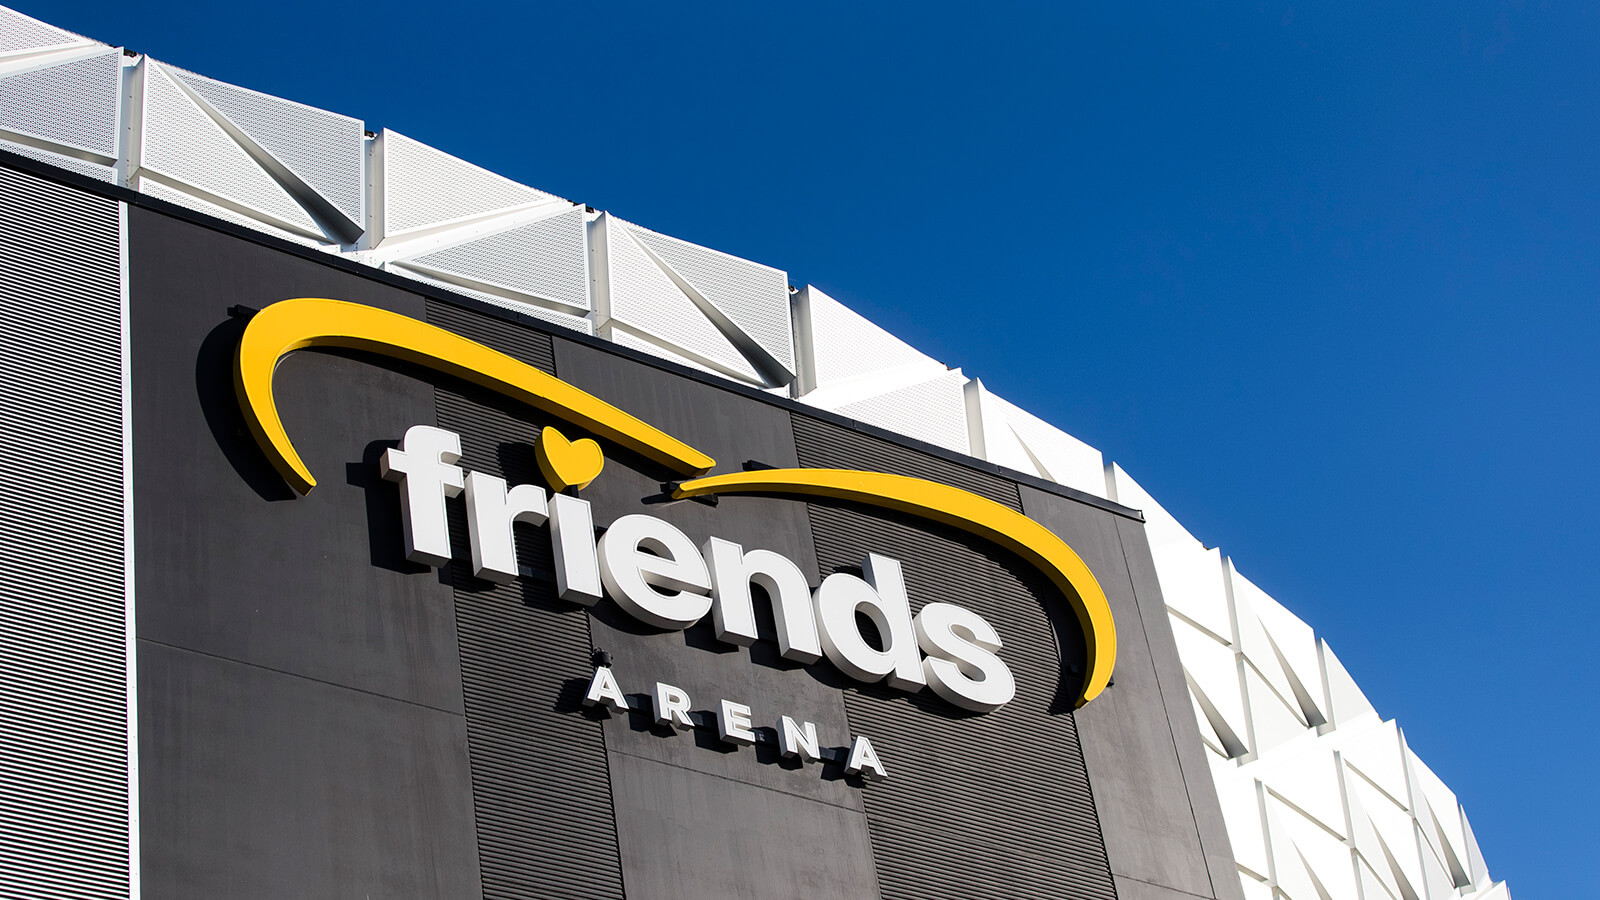 Friends Arena